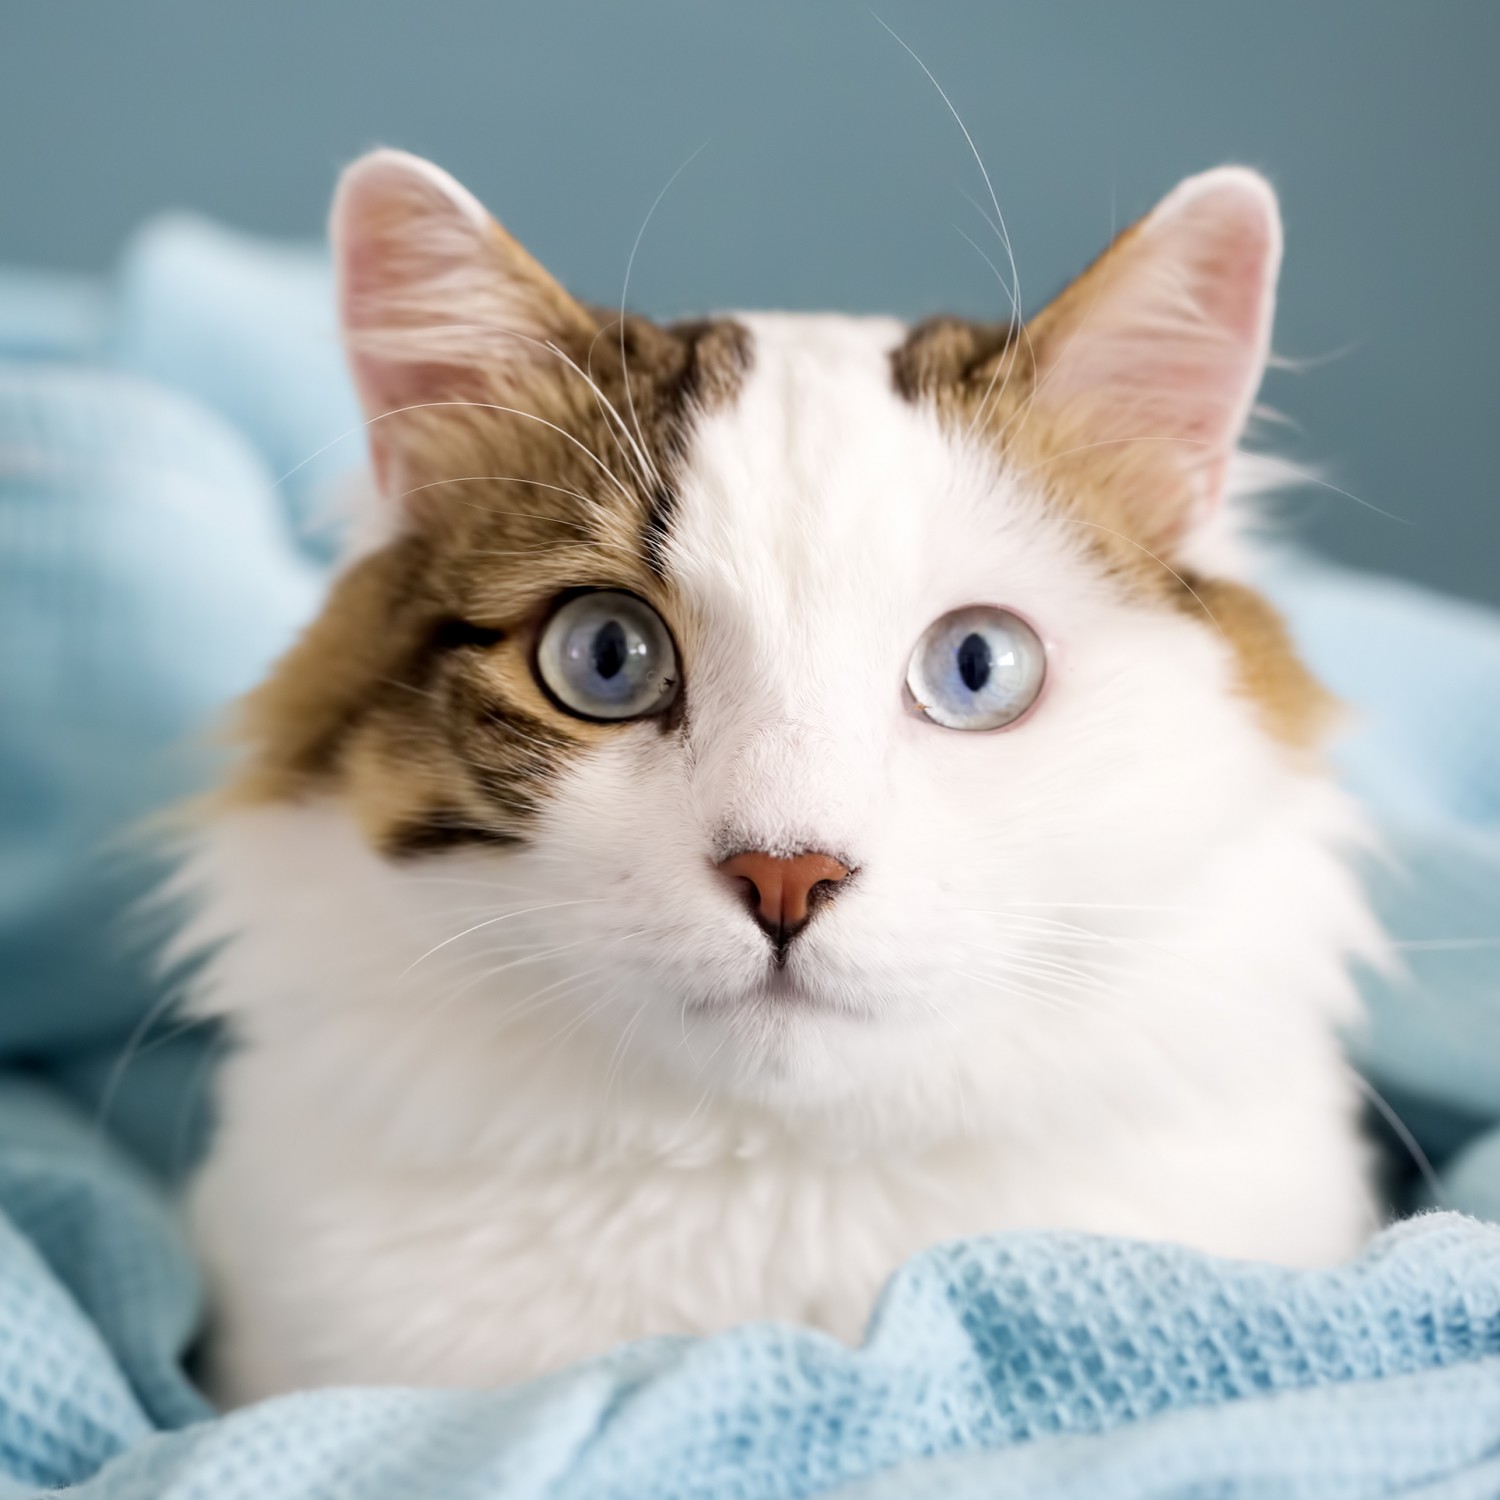 Wellness Care - Cat in a Blanket